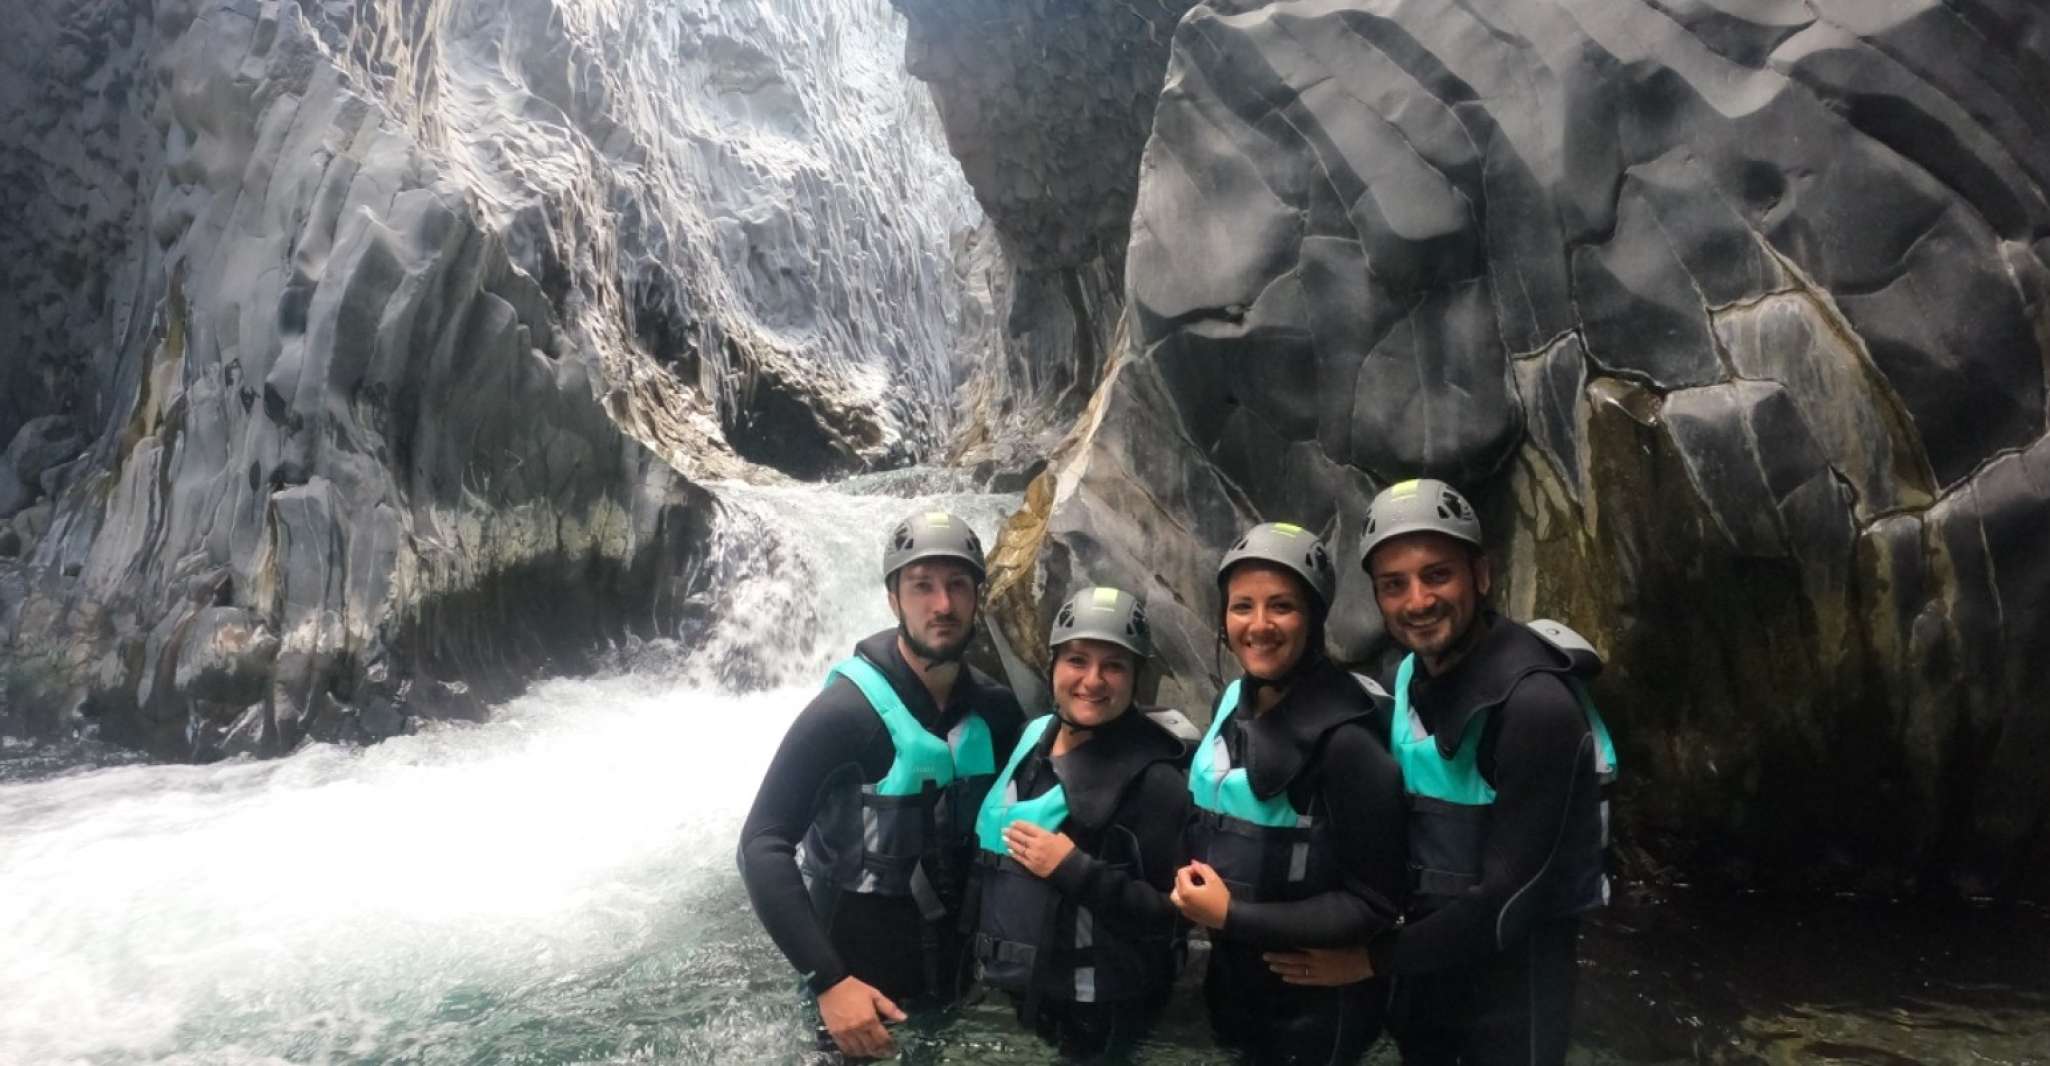 From Motta Camastra, Alcantara Gorges Body Rafting Trip - Housity